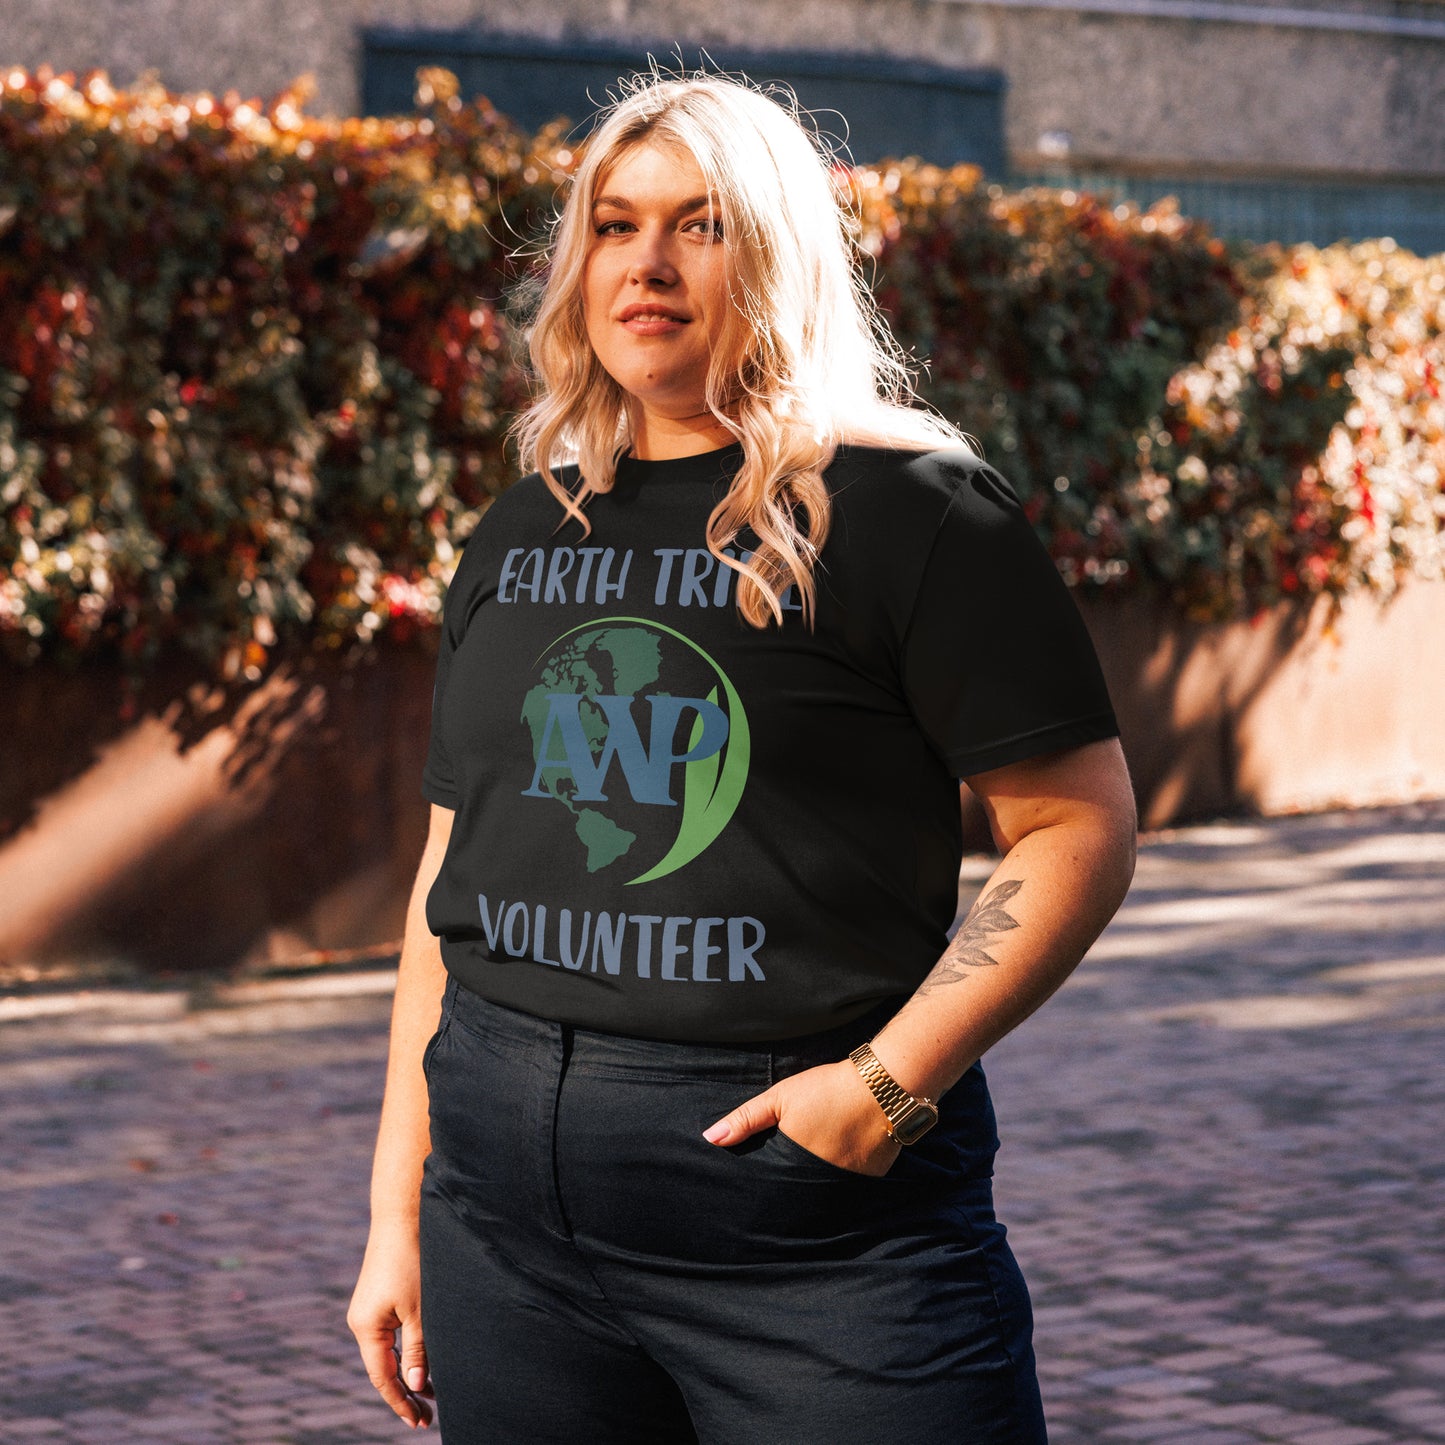 FREE After Becoming AWP's Volunteer! Organic Earth Tribe Volunteer T-Shirt